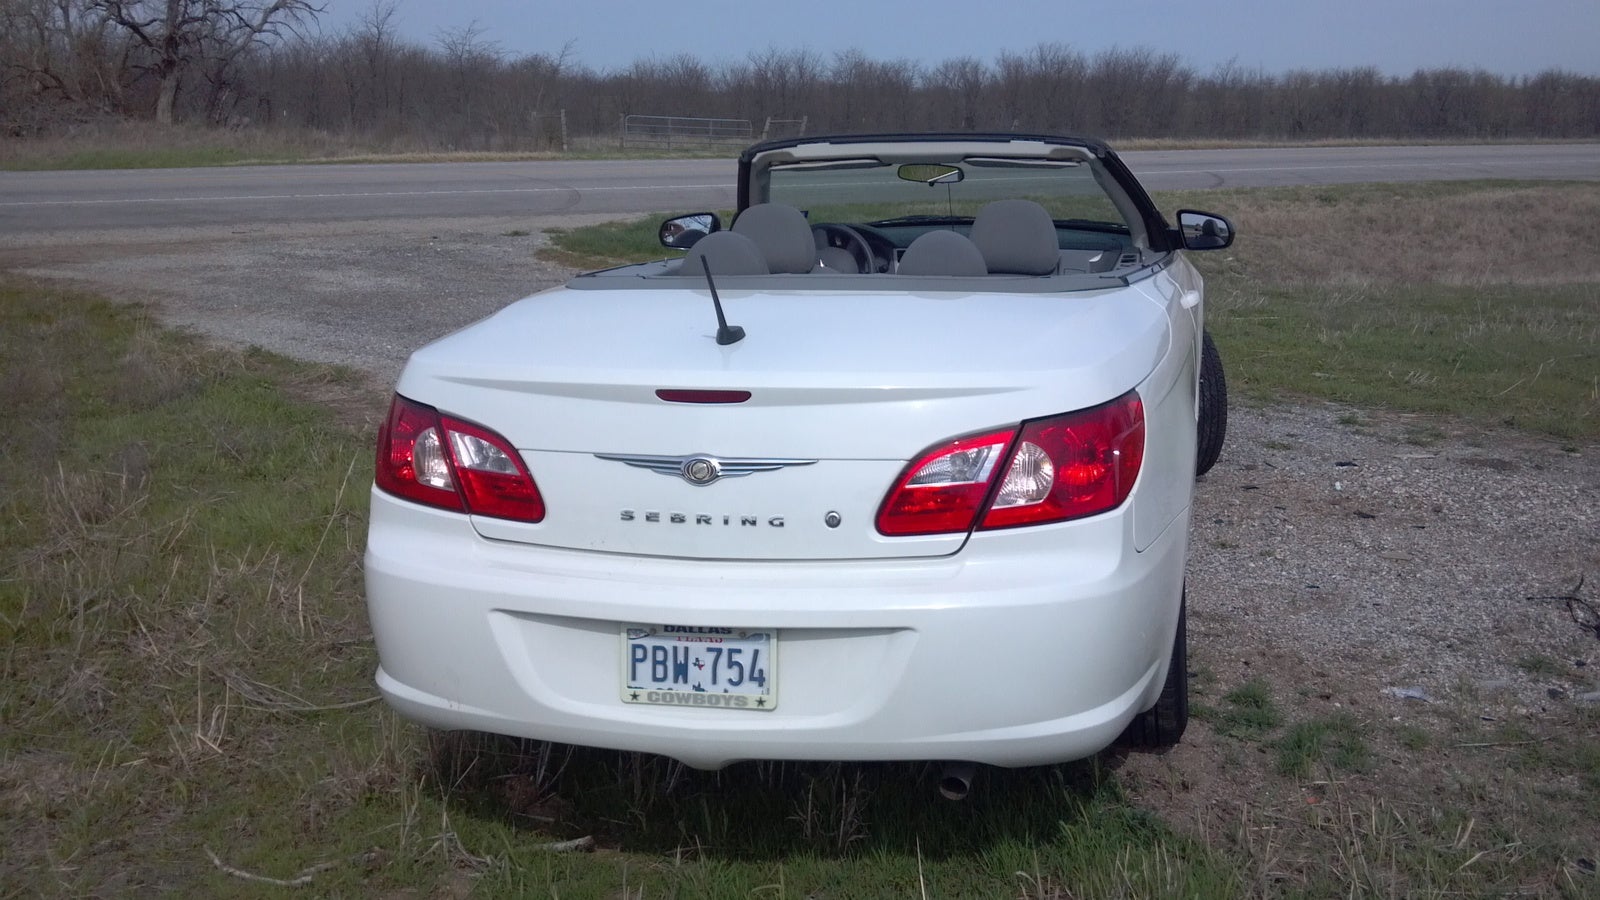 2008 Chrysler sebring recalls problems